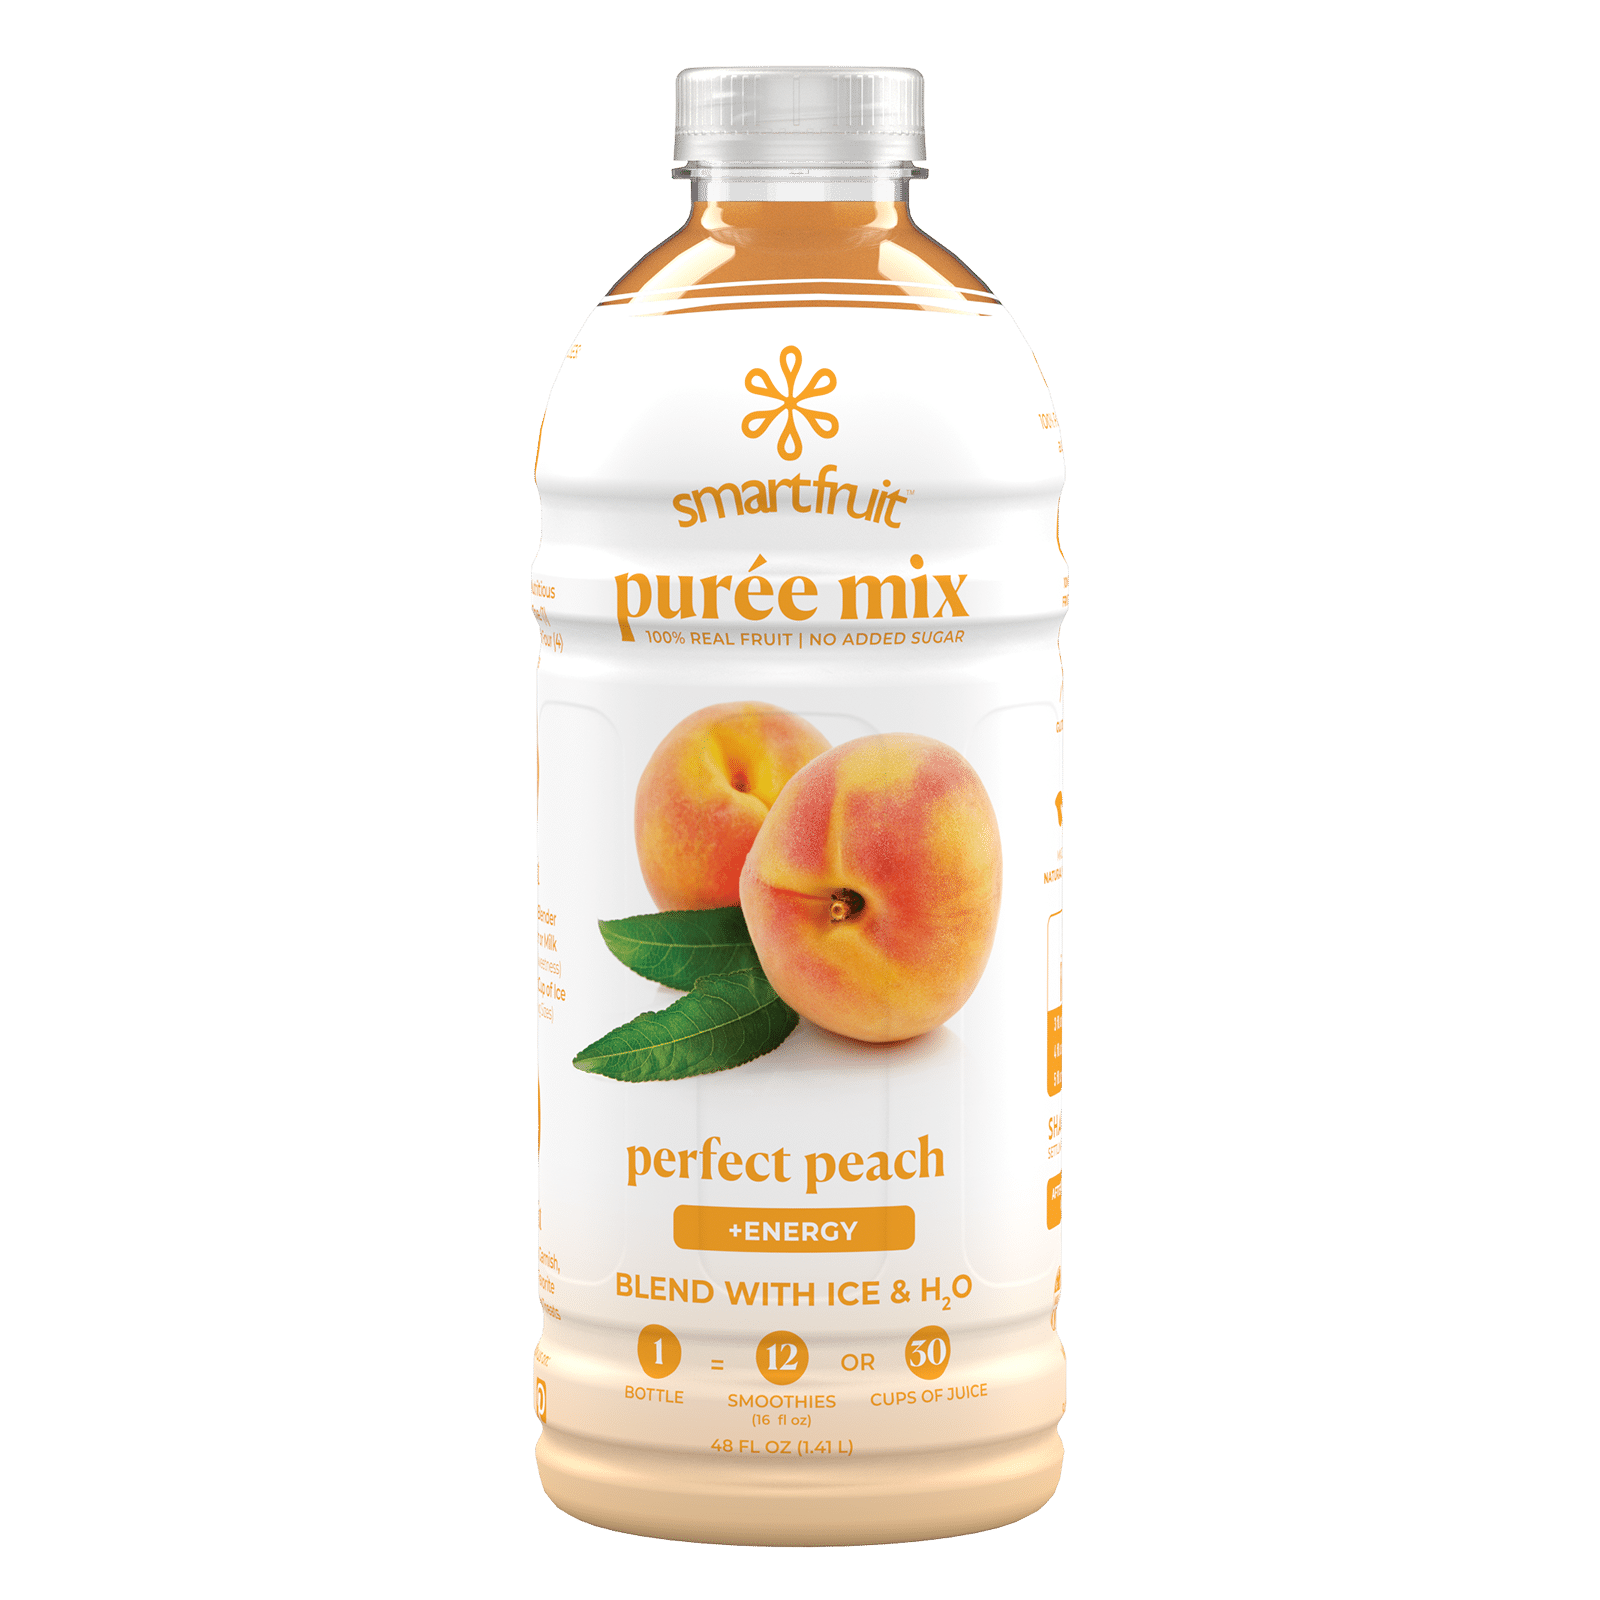 Smartfruit Perfect Peach Puree Mix bottle